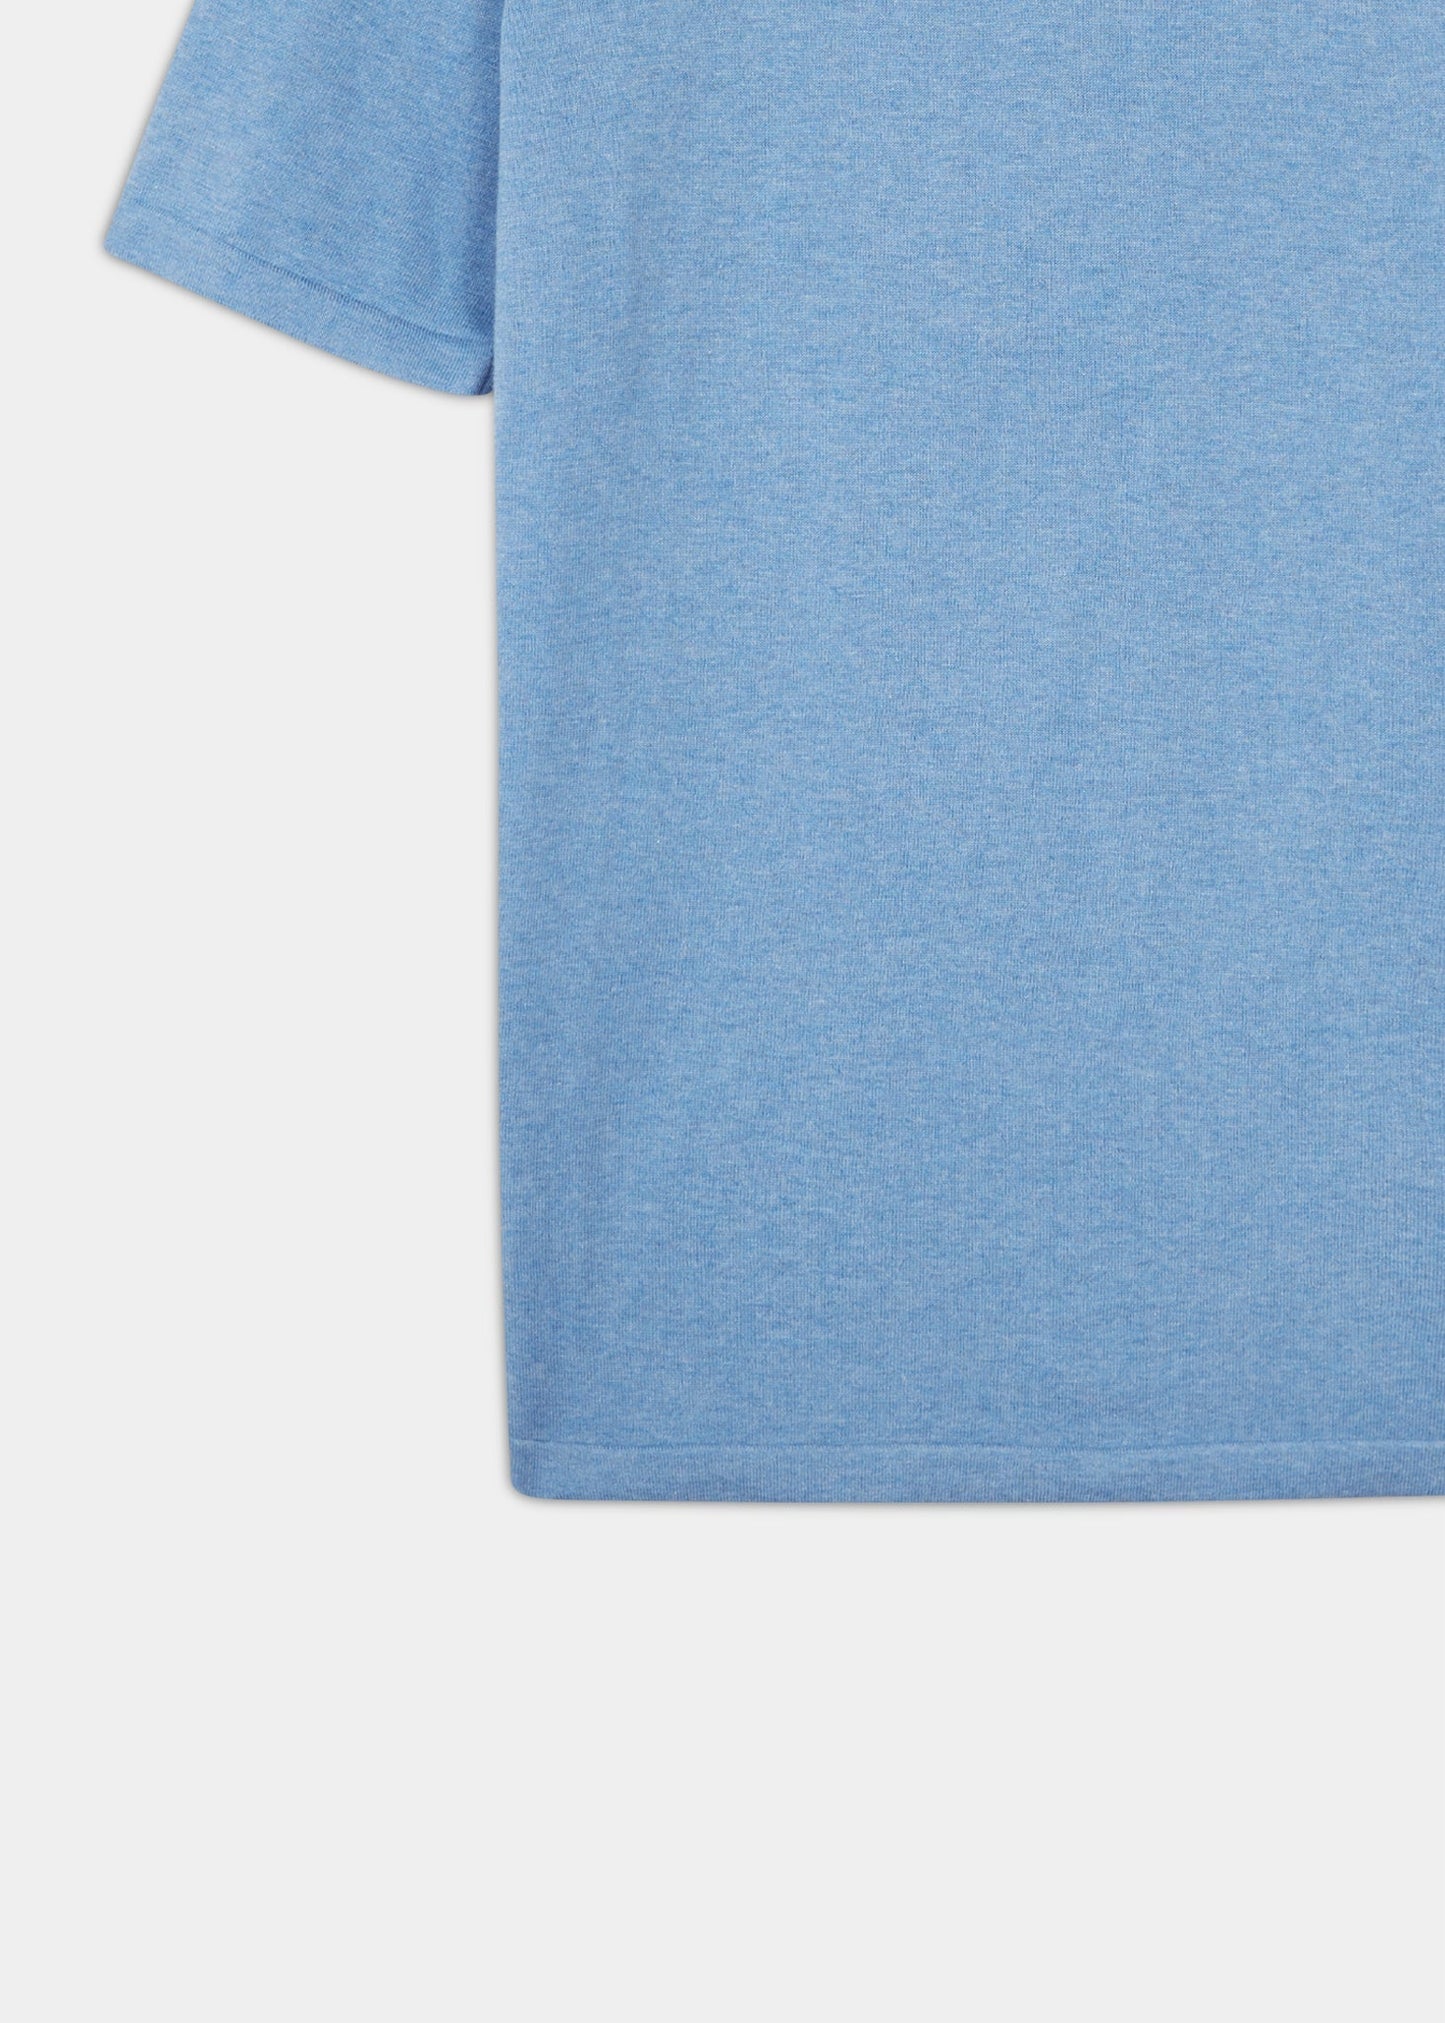 Men's luxury cotton short sleeve polo shirt in carolina blue